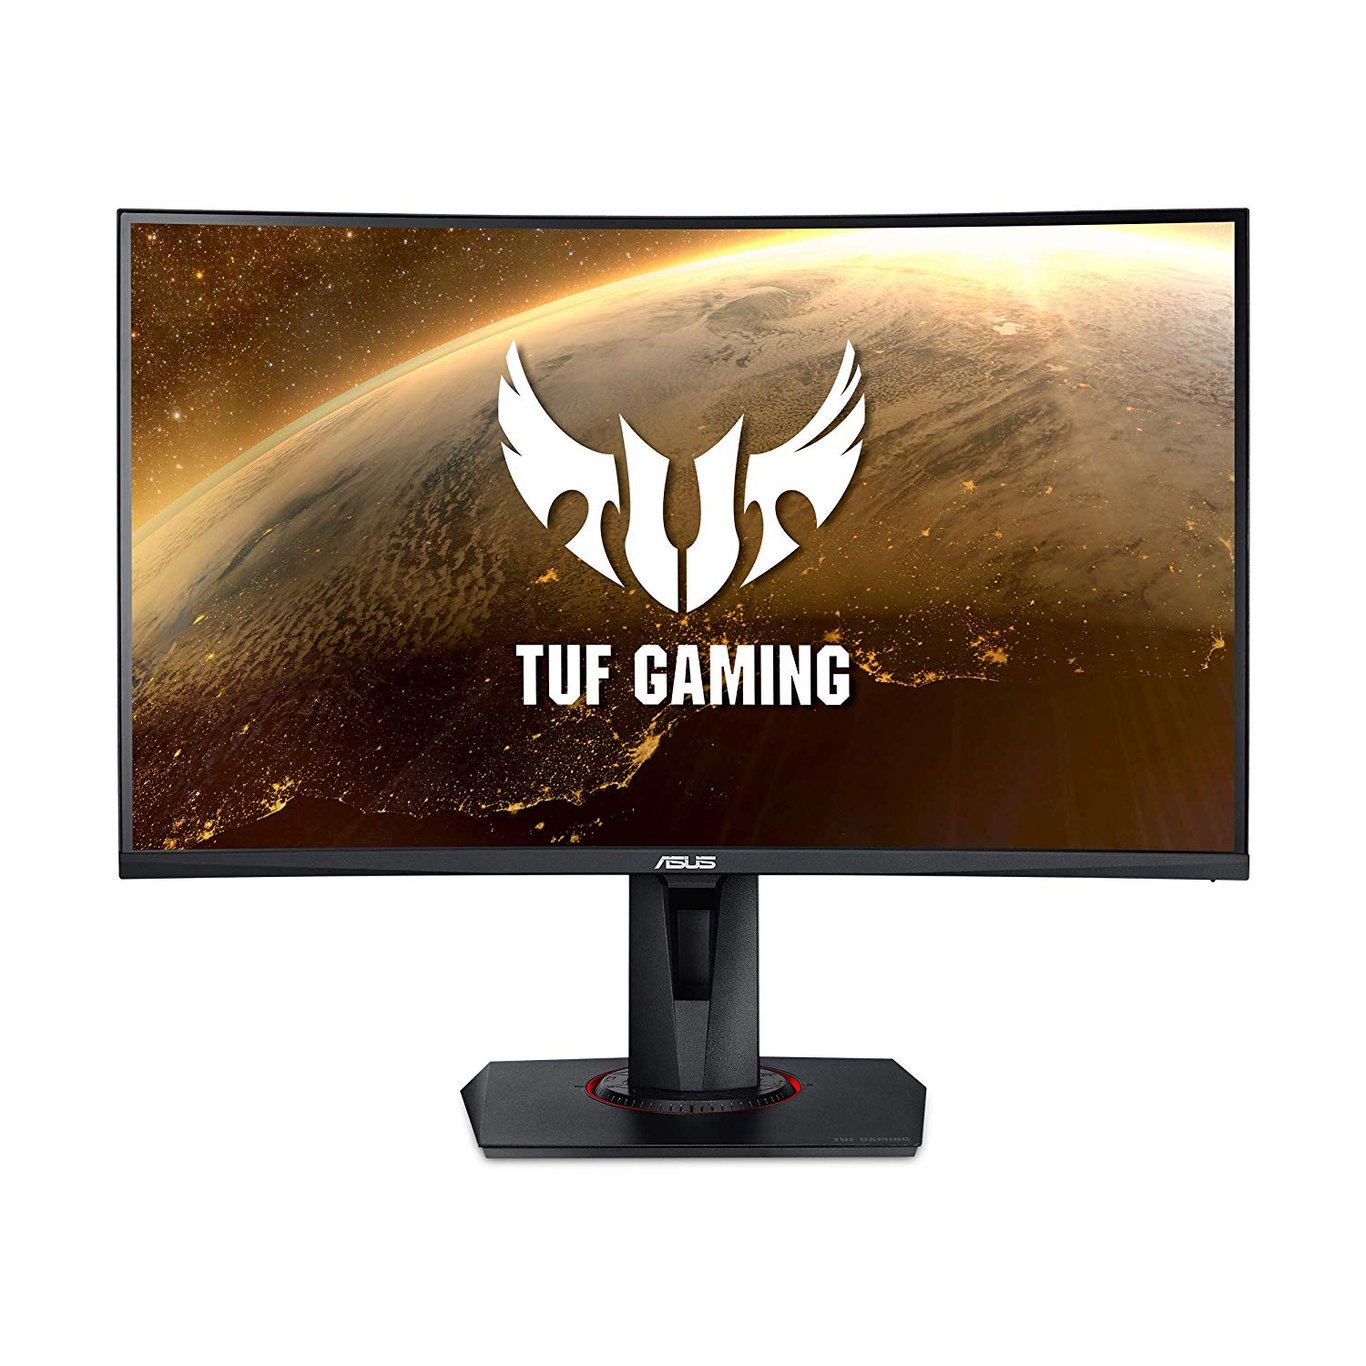 ASUS 華碩 TUF Gaming VG27VQ 電競顯示器